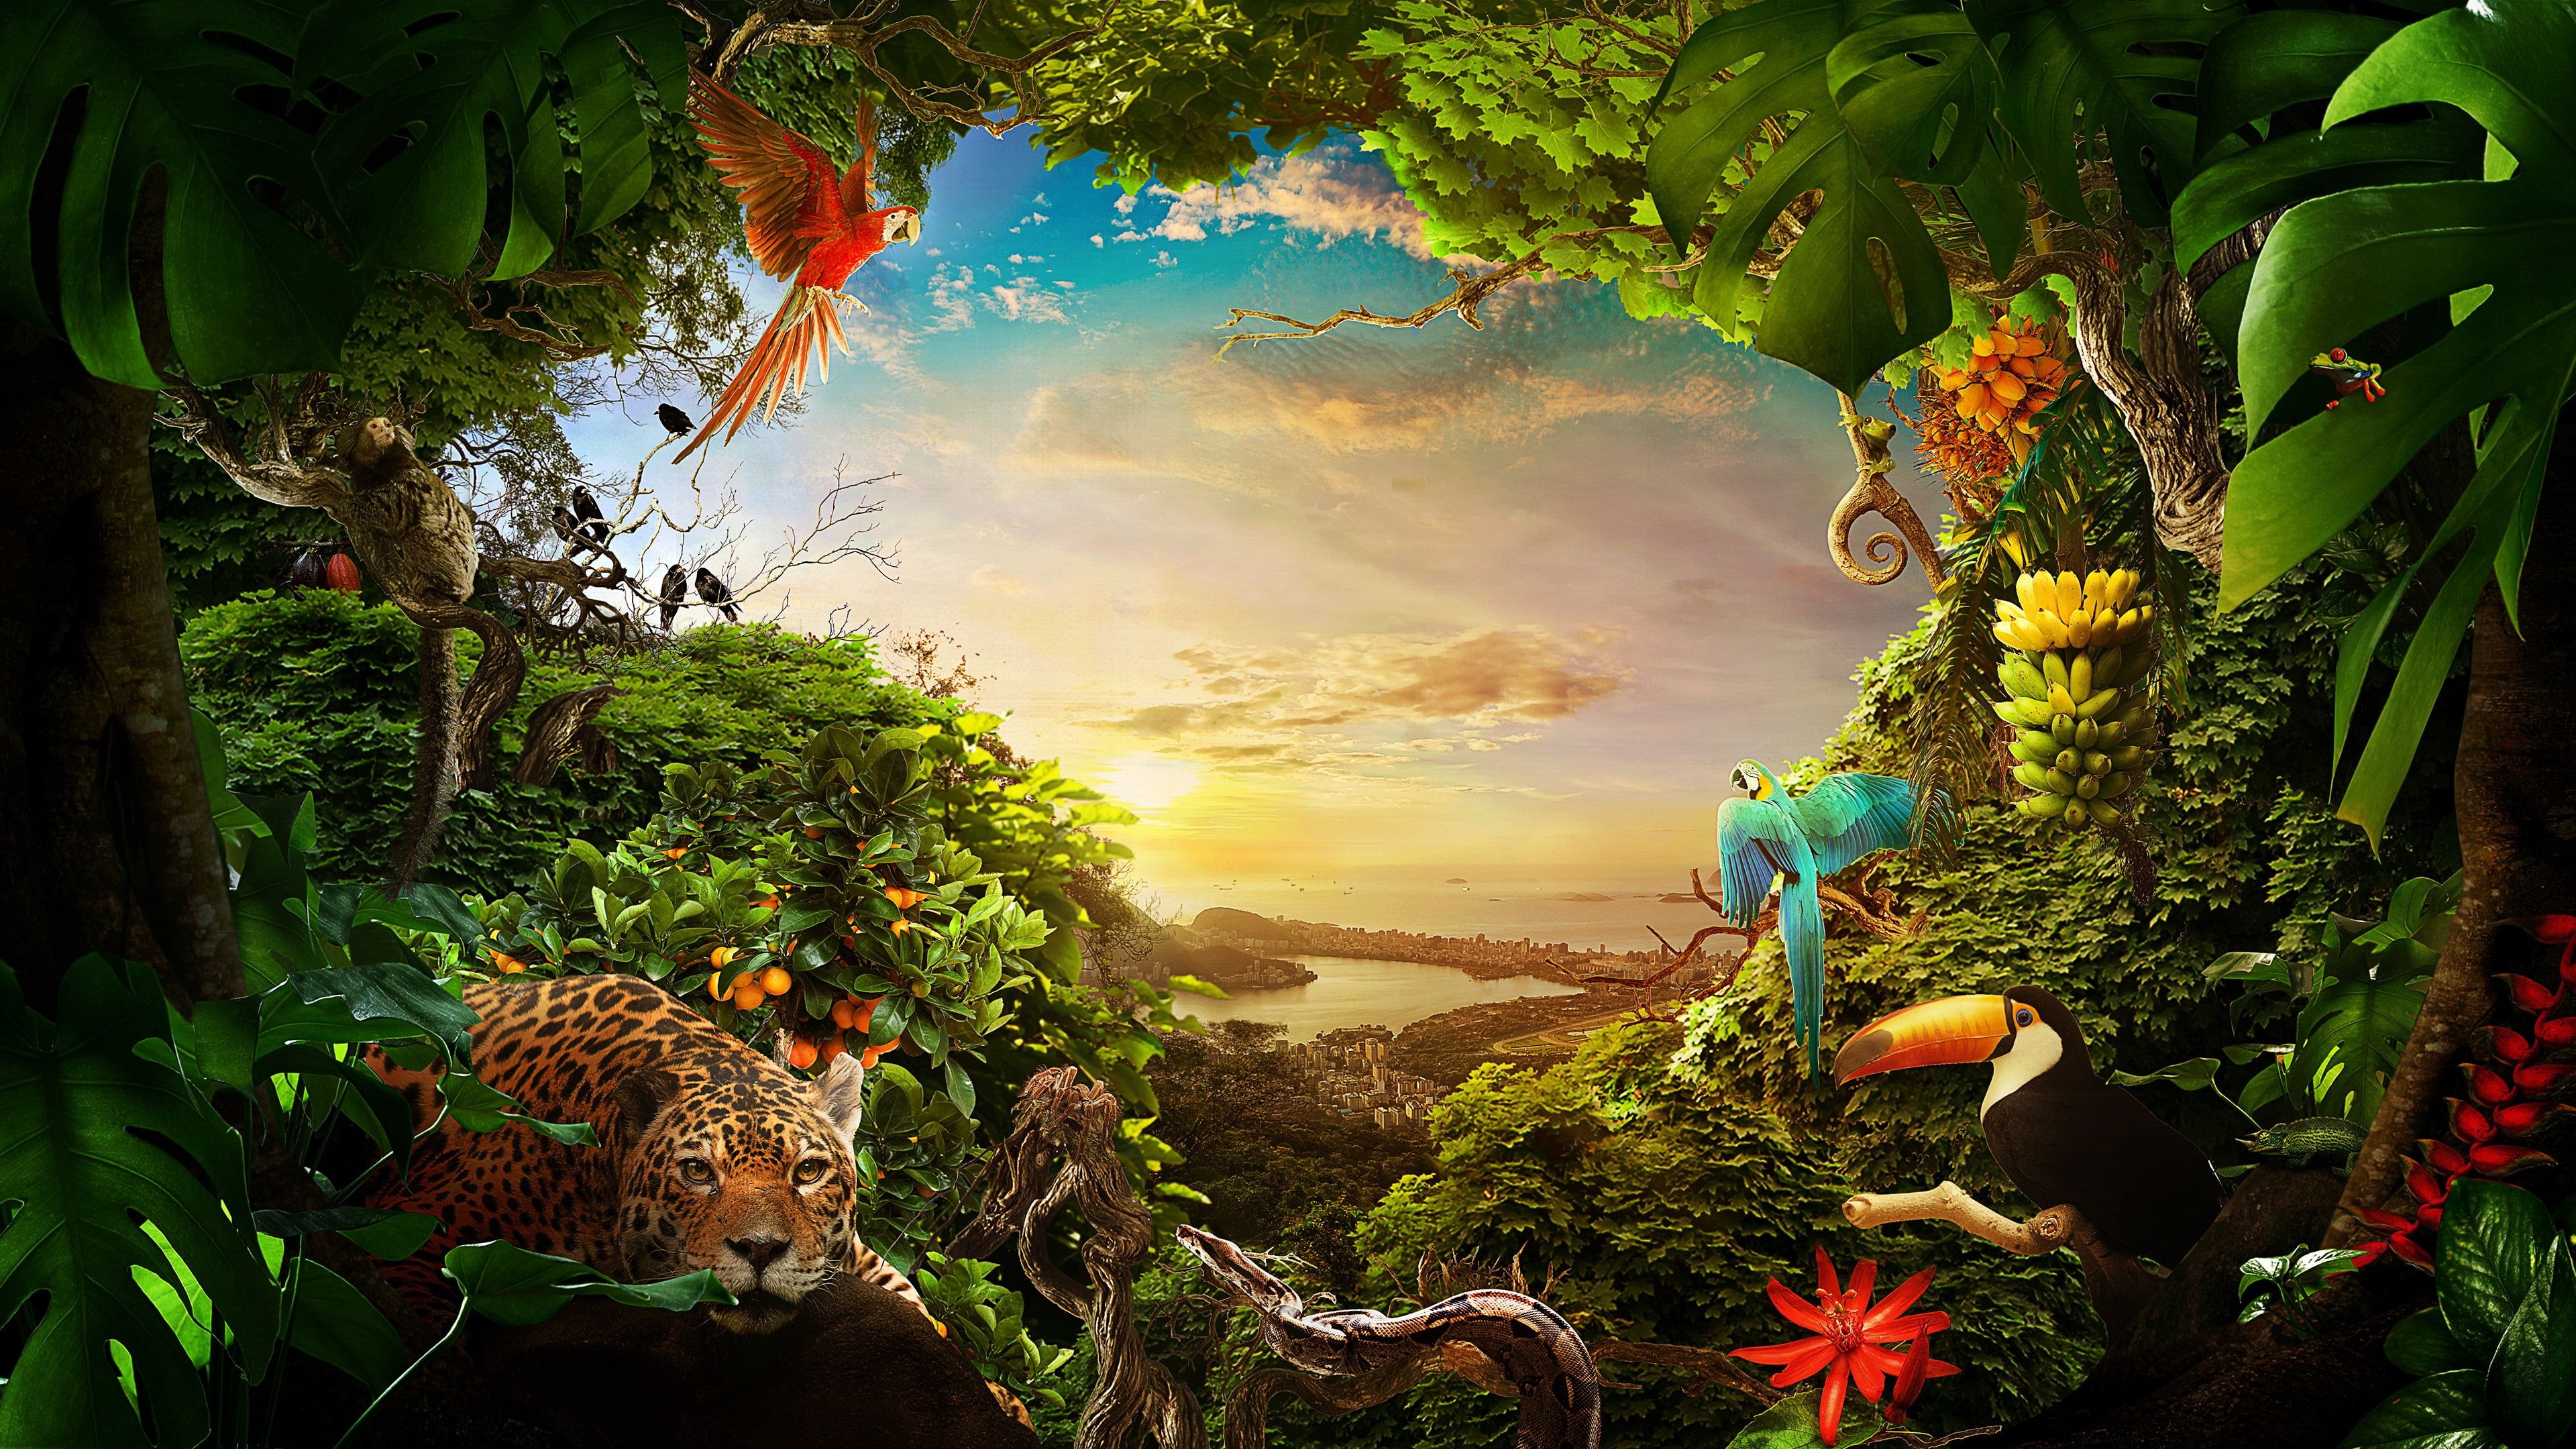 Jungle Animal, Brazilian wildlife, 4K nature wallpaper, Forest and wildlife beauty, 3840x2160 4K Desktop